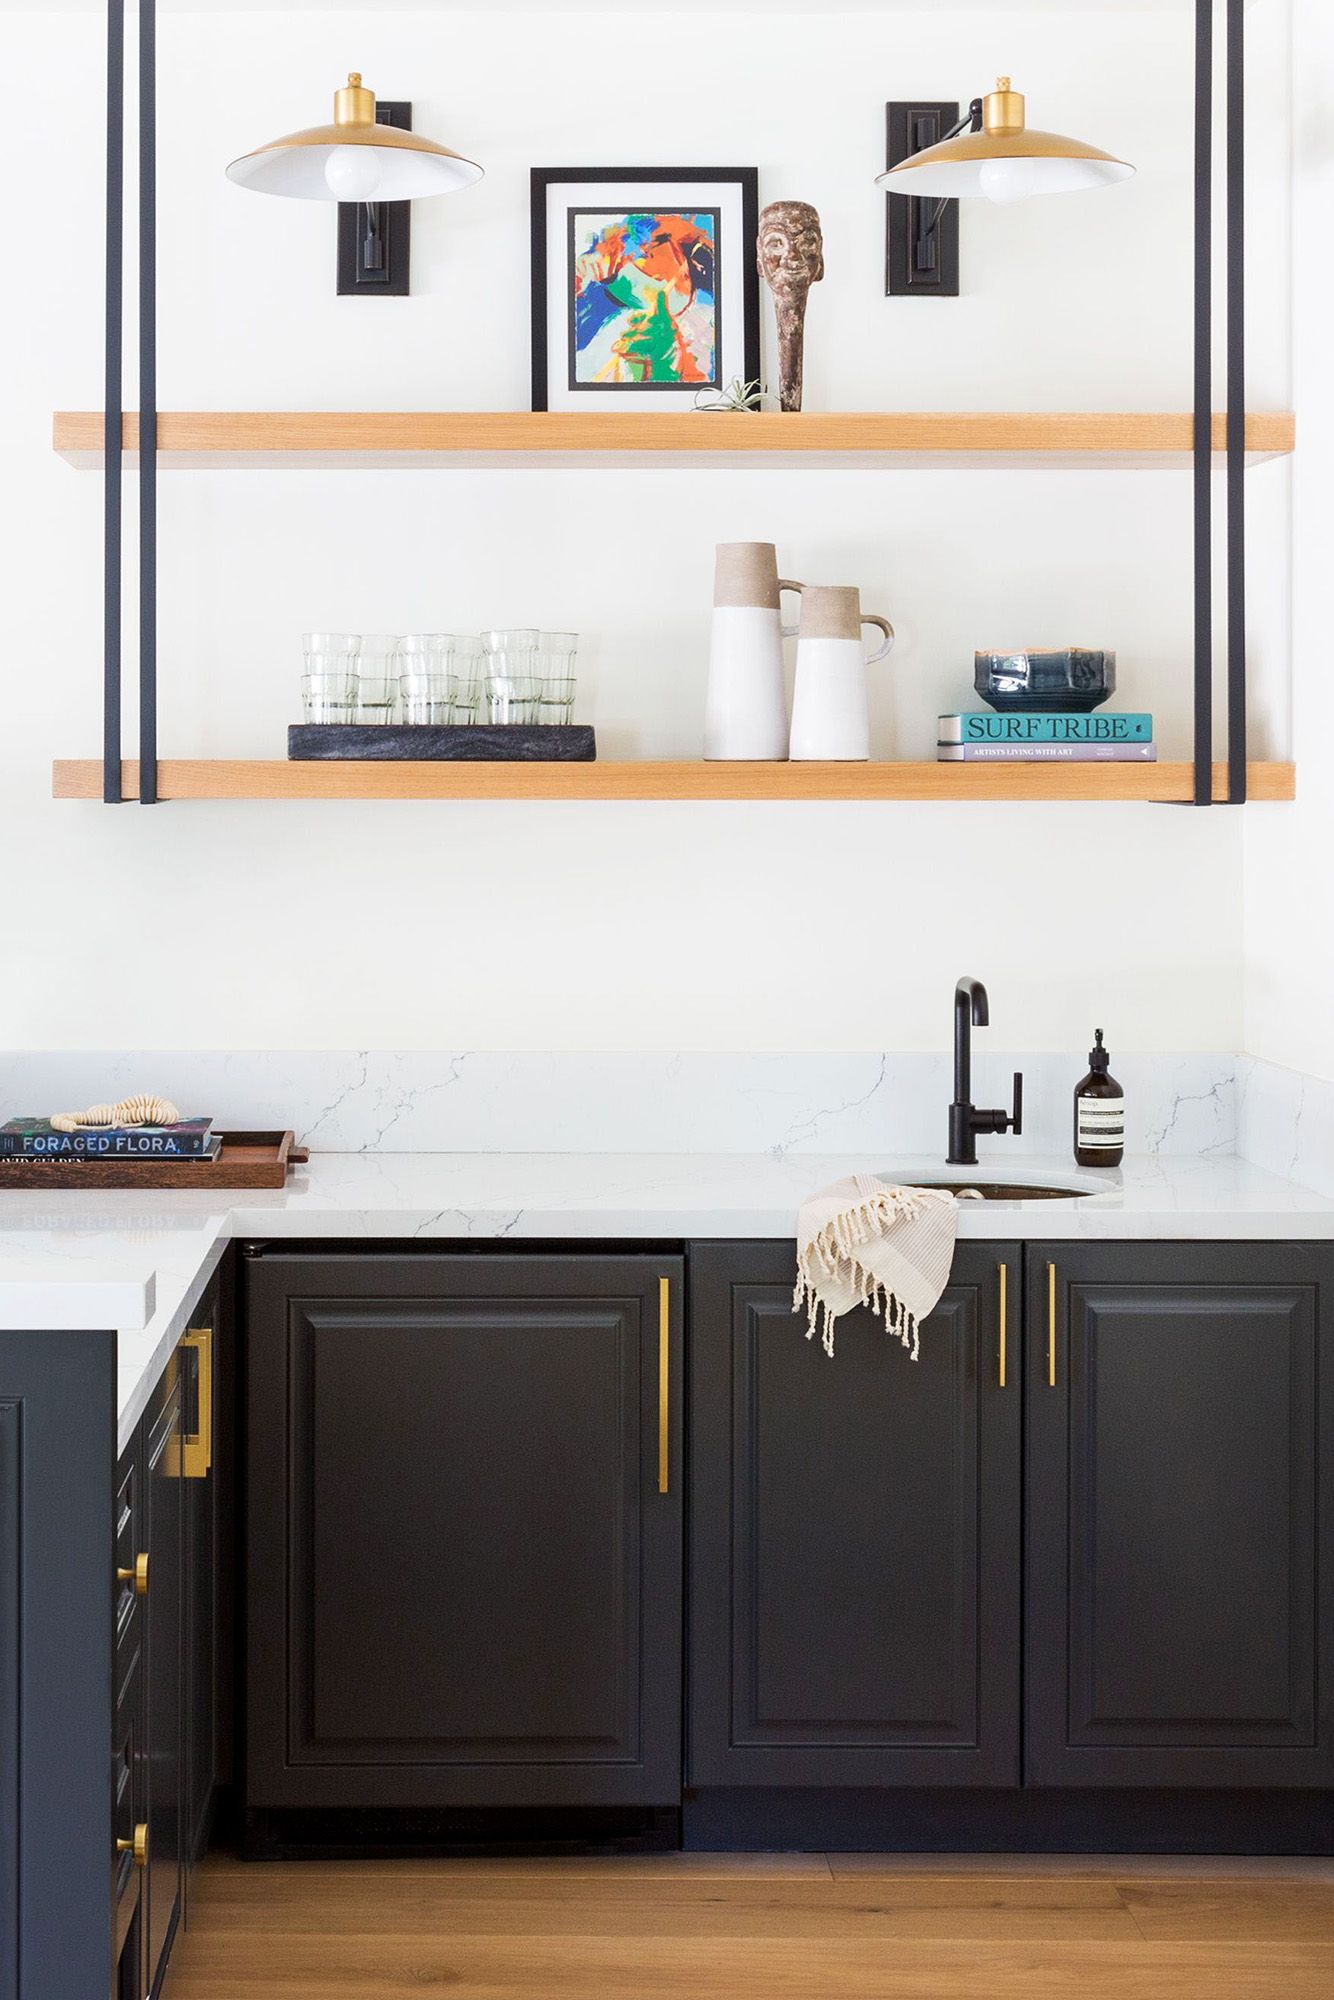 20 Best Small Kitchen Design Ideas   Tiny Kitchen Decorating